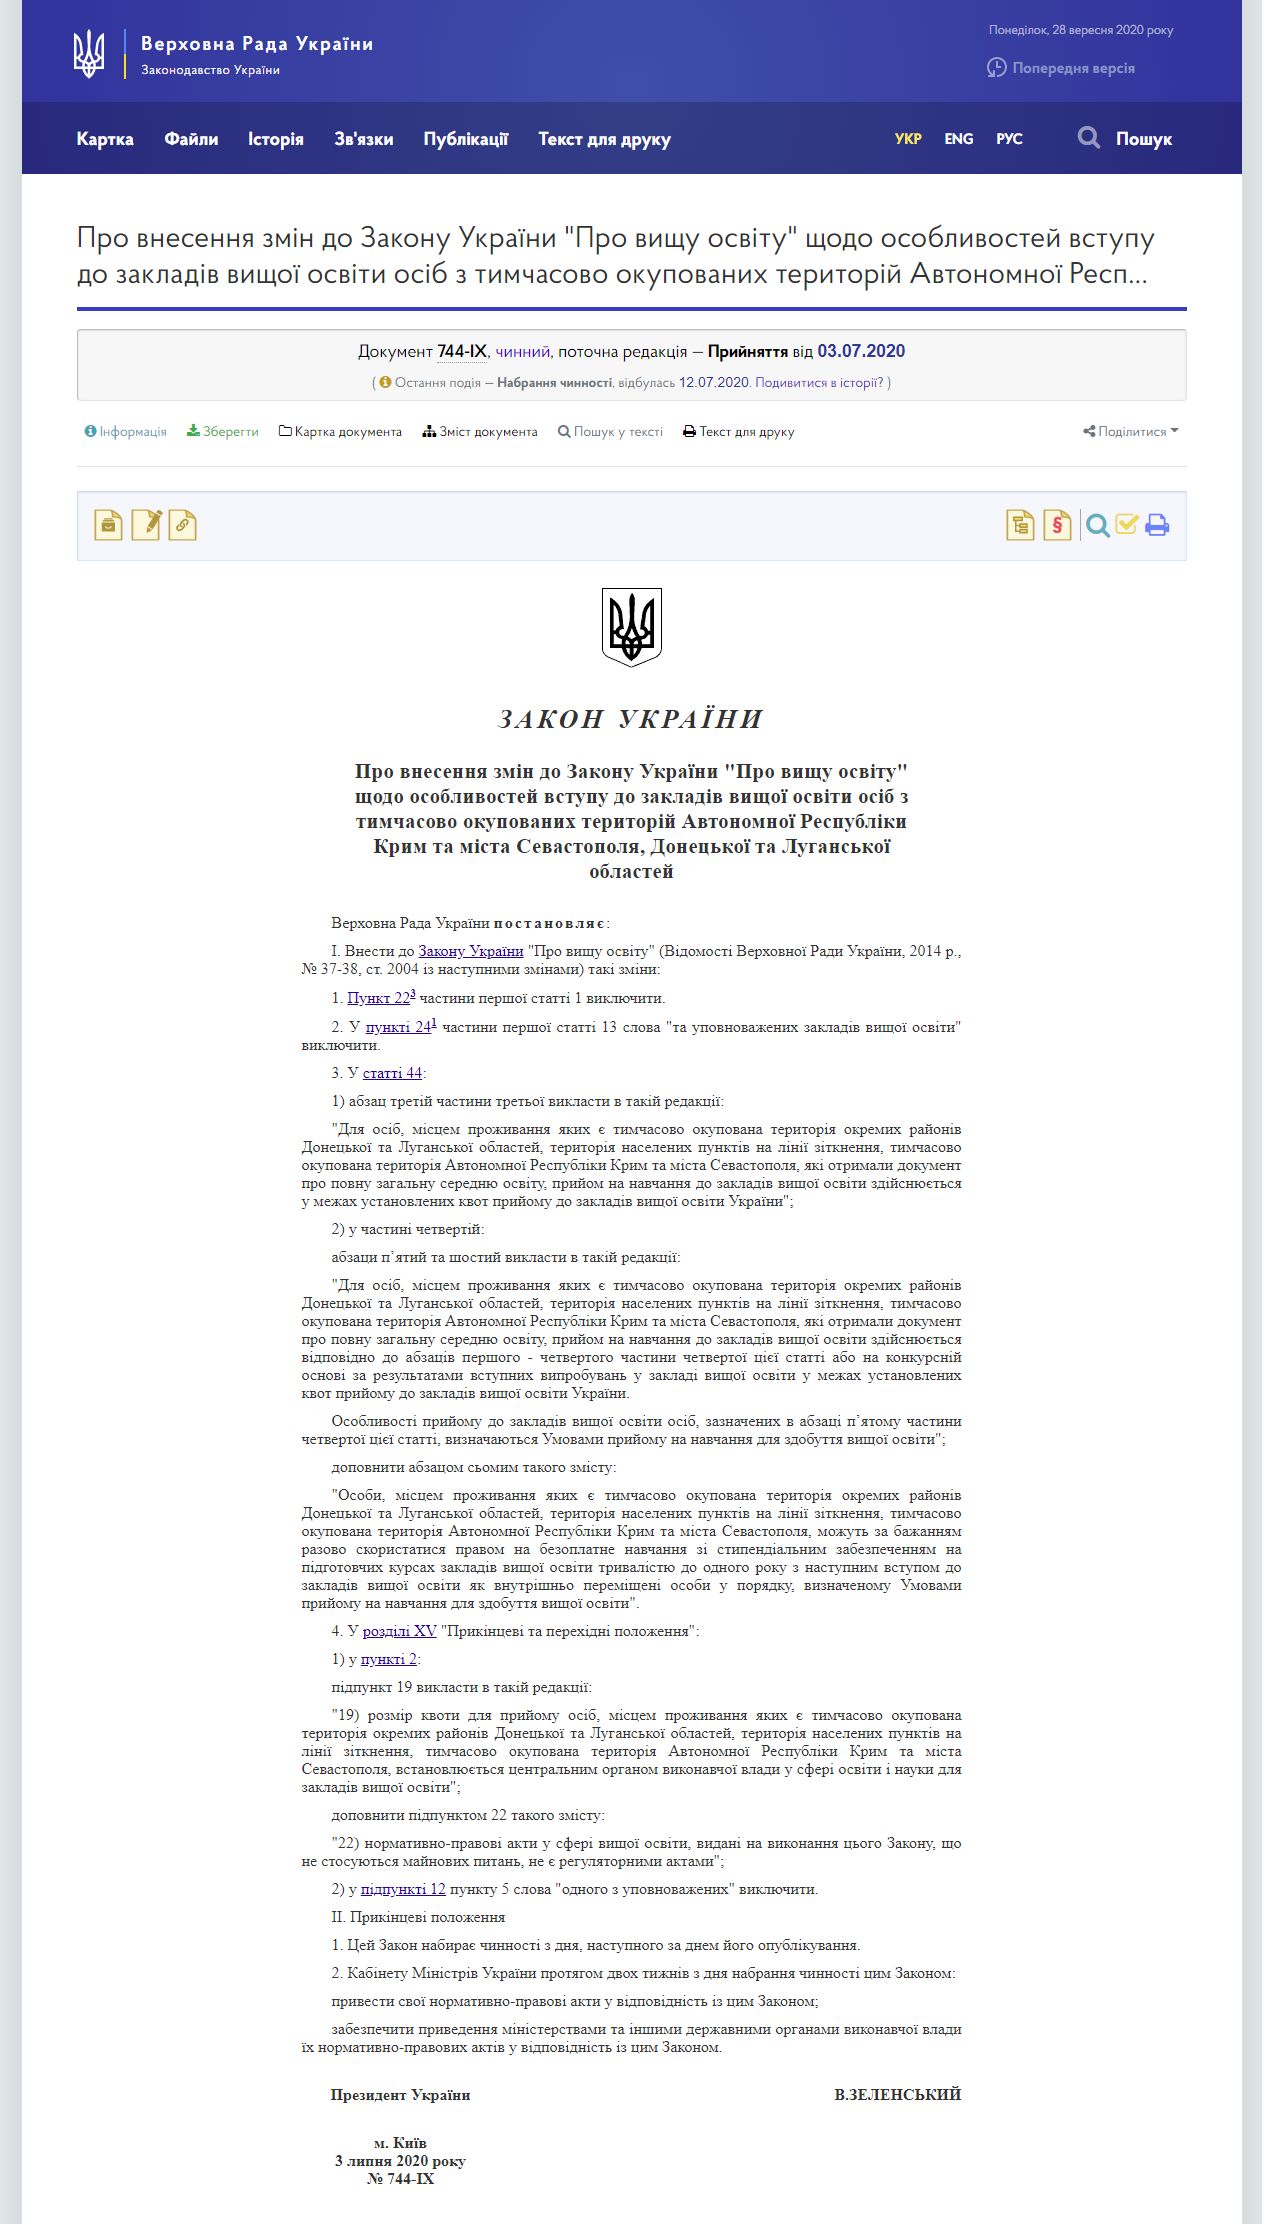 https://zakon.rada.gov.ua/laws/show/744-IX#Text